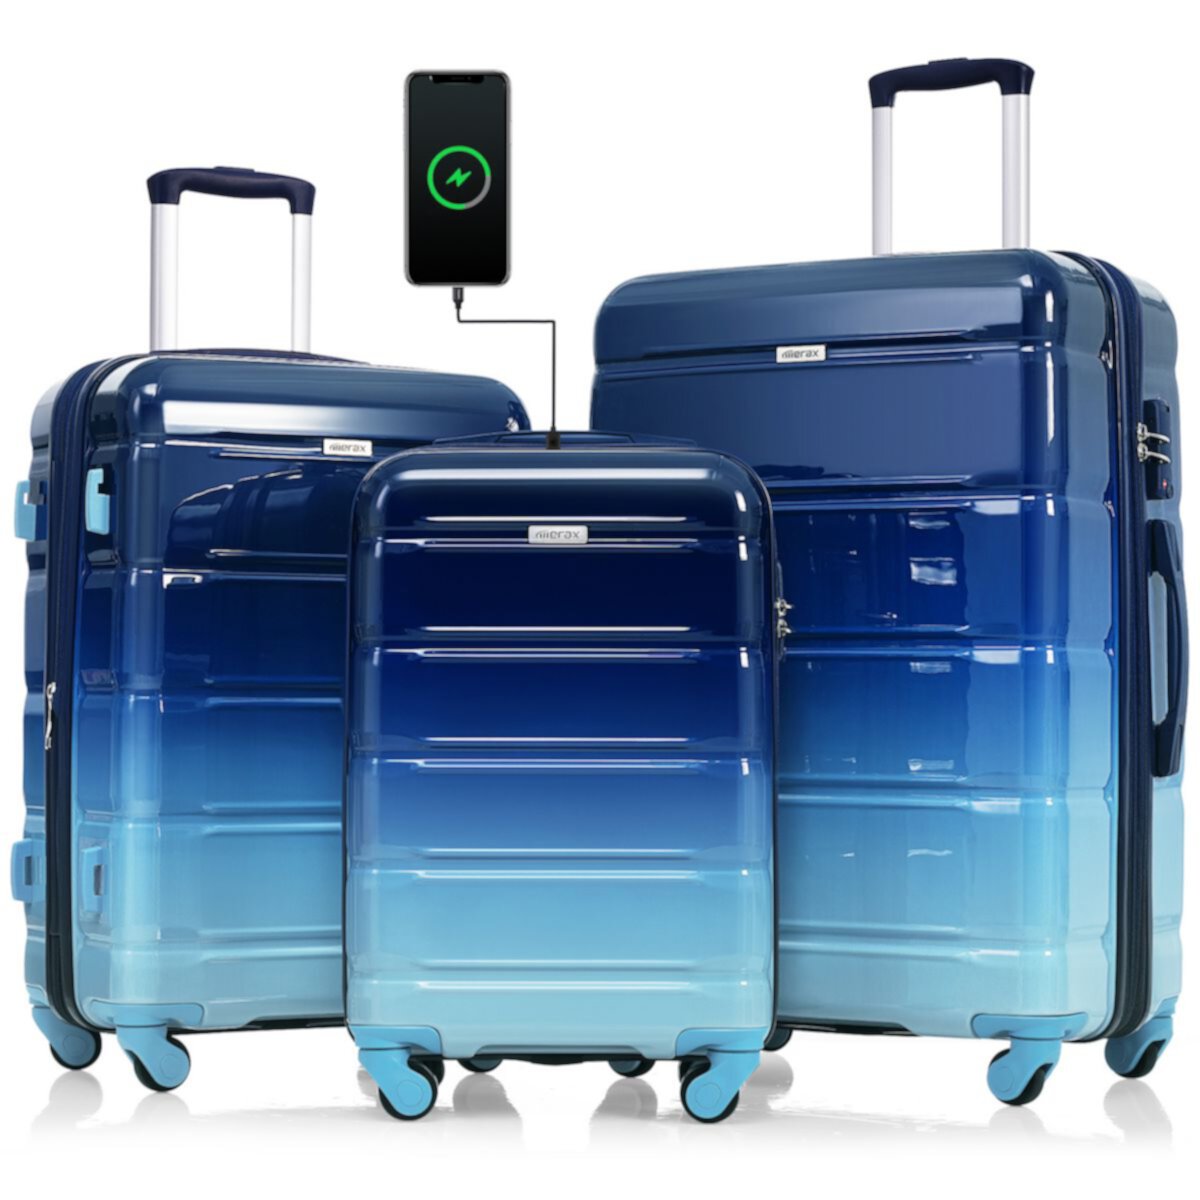 Merax Hardshell Luggage Sets 3 Pcs Spinner Suitcase With Tsa Lock，20-inch With Usb Port Merax